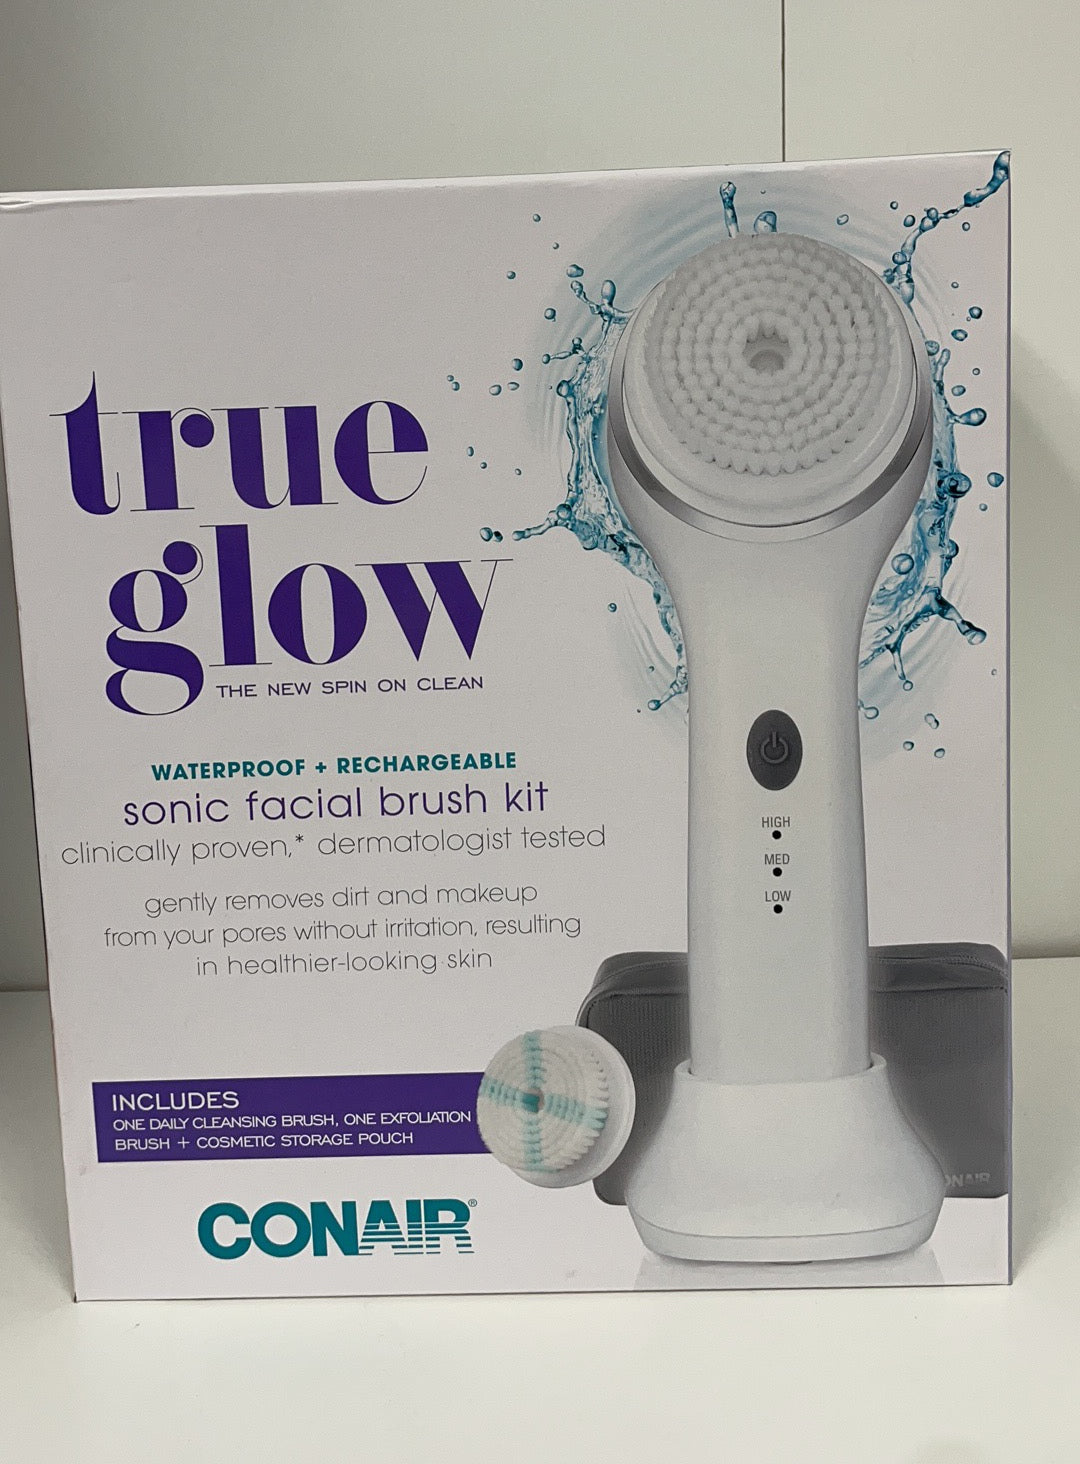 Conair True Glow Sonic Facial Brush Kit Waterproof Rechargeable 2 Brush Heads